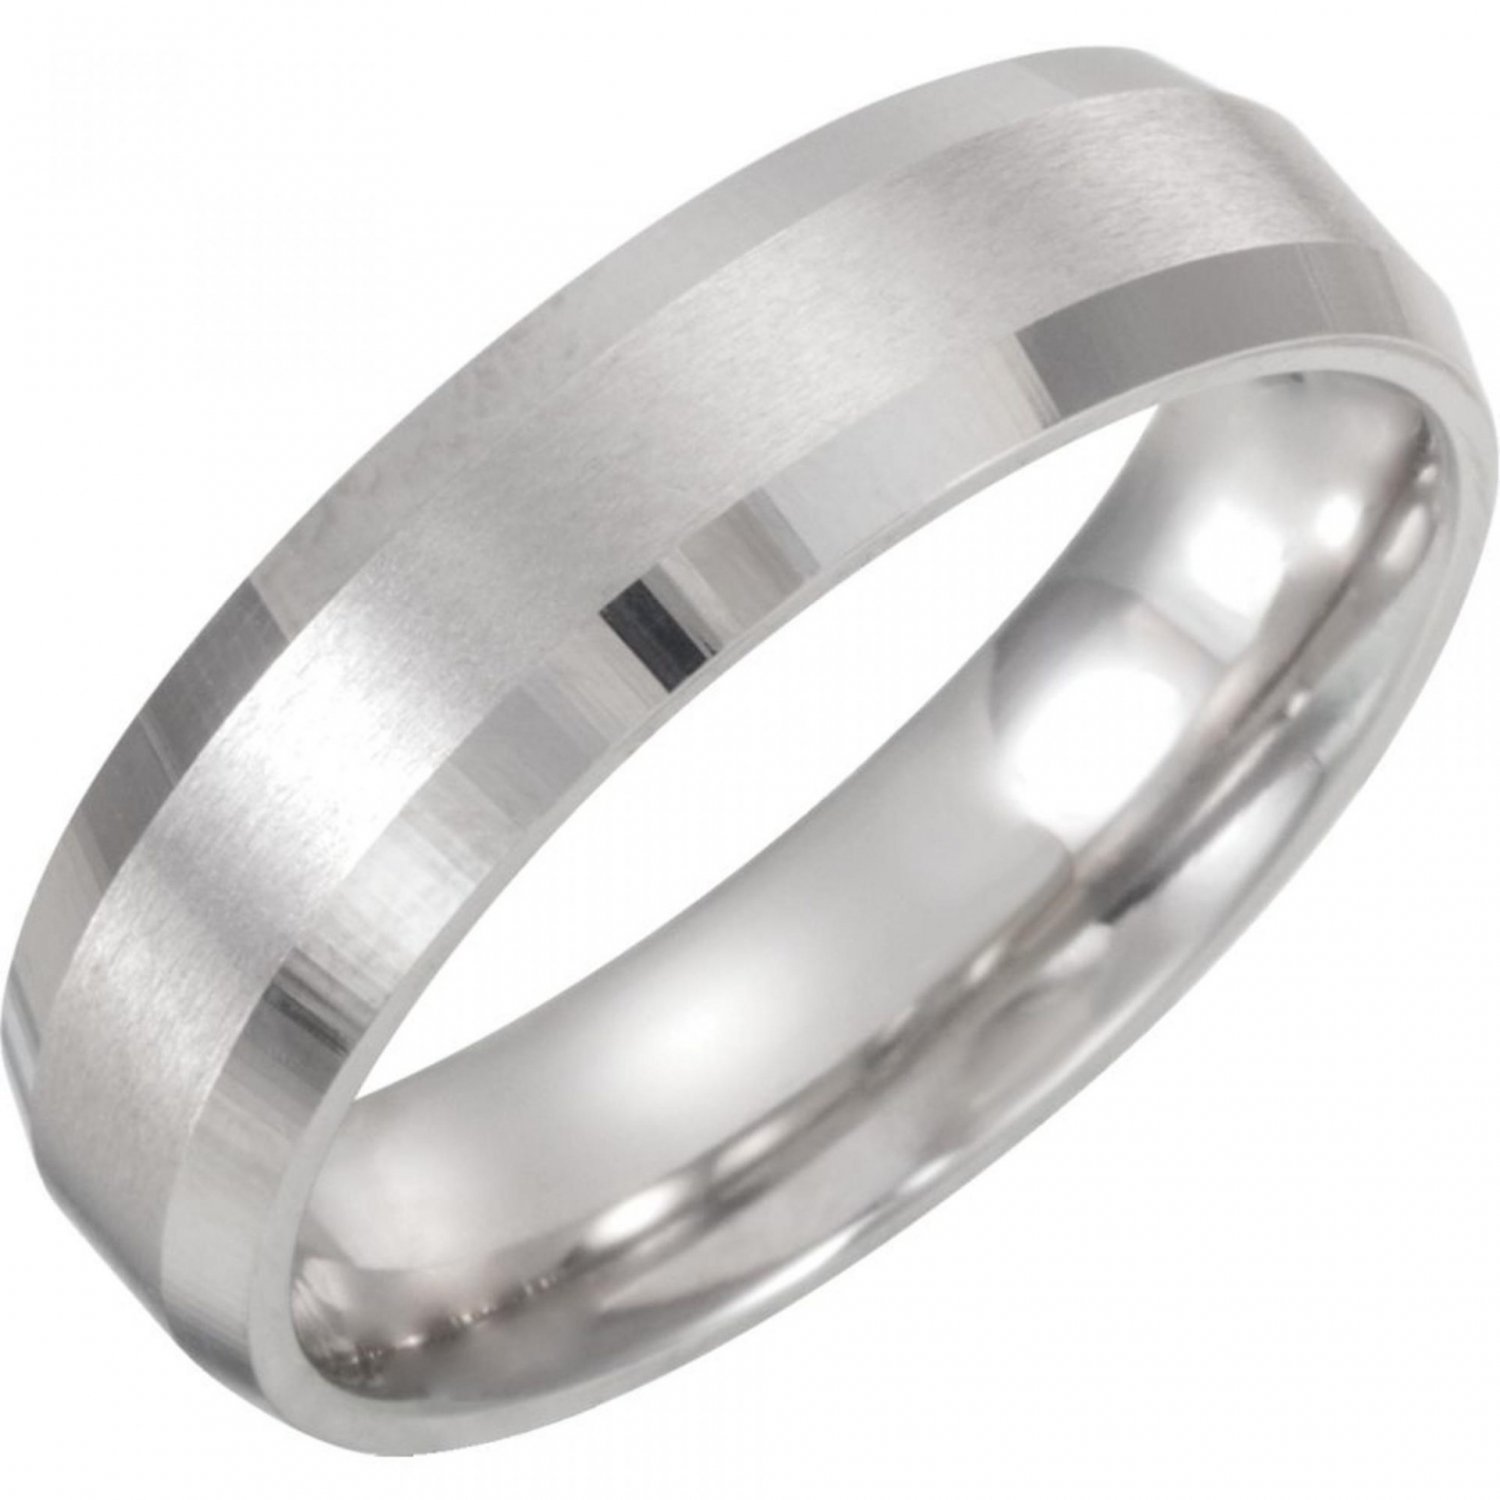 Men's 6mm Platinum Wedding Band With Beveled Edge | Grants Jewelry